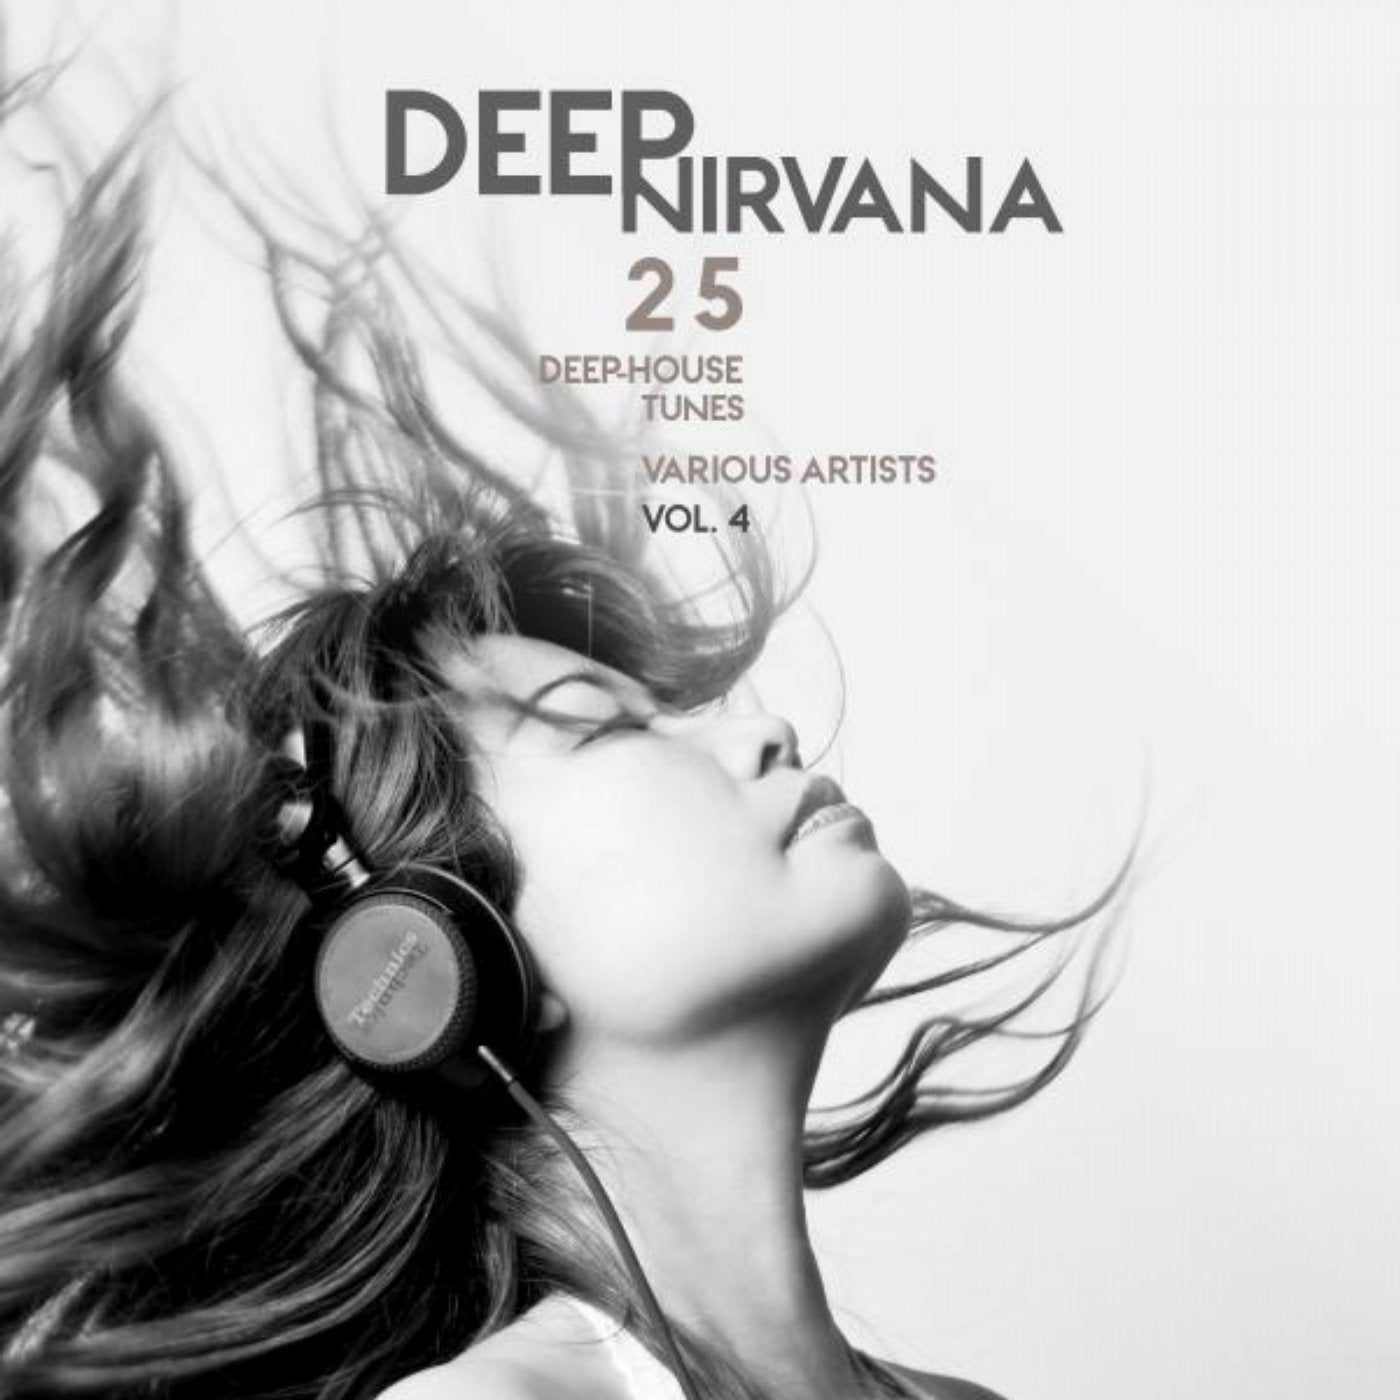 Deep Nirvana, Vol. 4 (25 Deep-House Tunes)